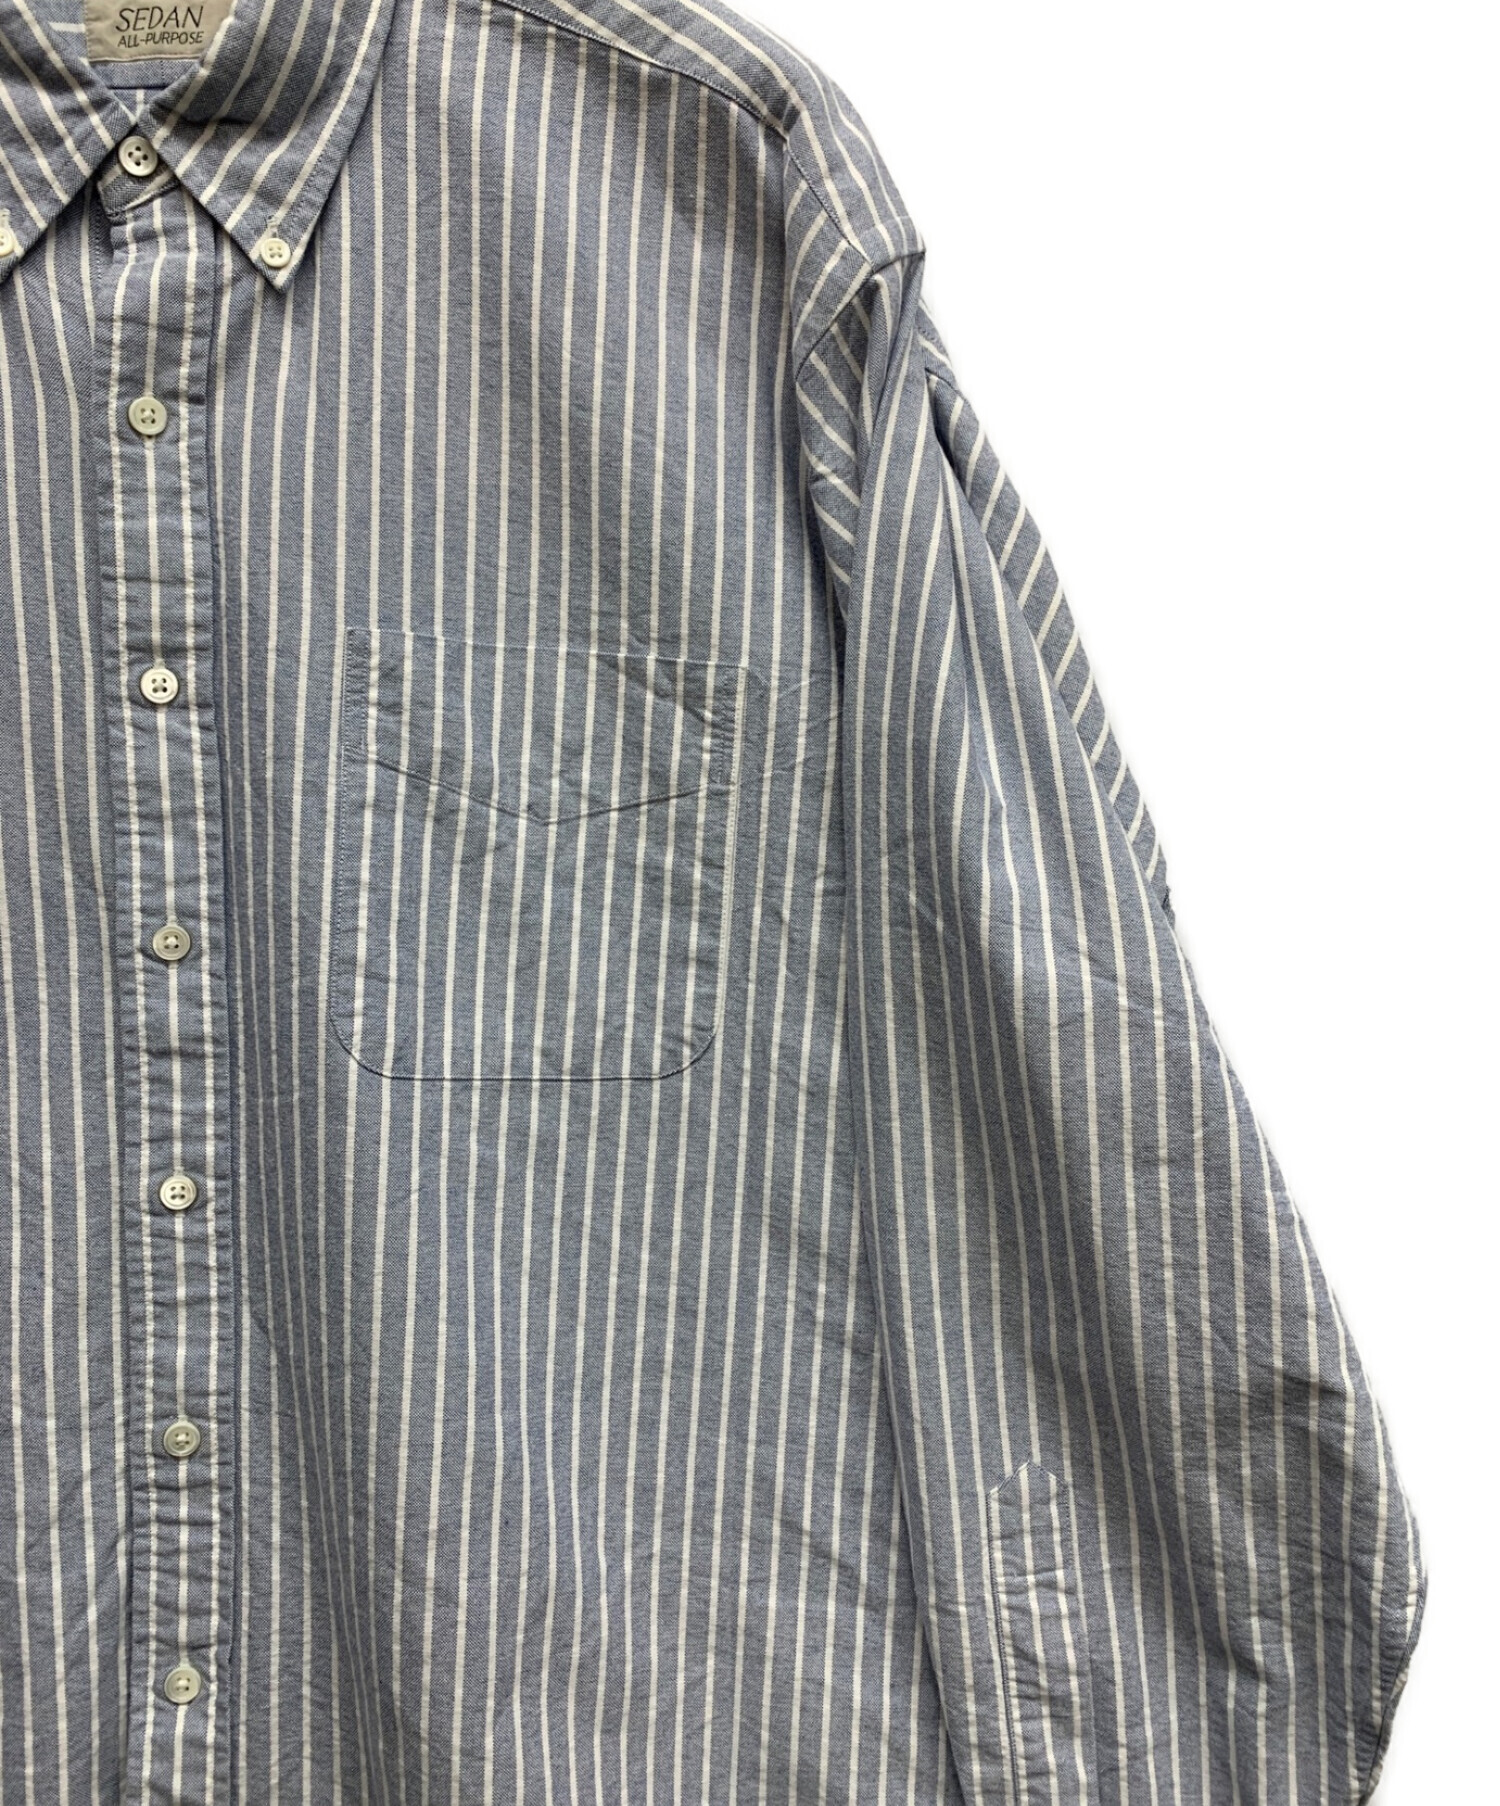 SEDAN ALL-PURPOSE (セダンオールパーパス) ストライプシャツ ブルー サイズ:XL